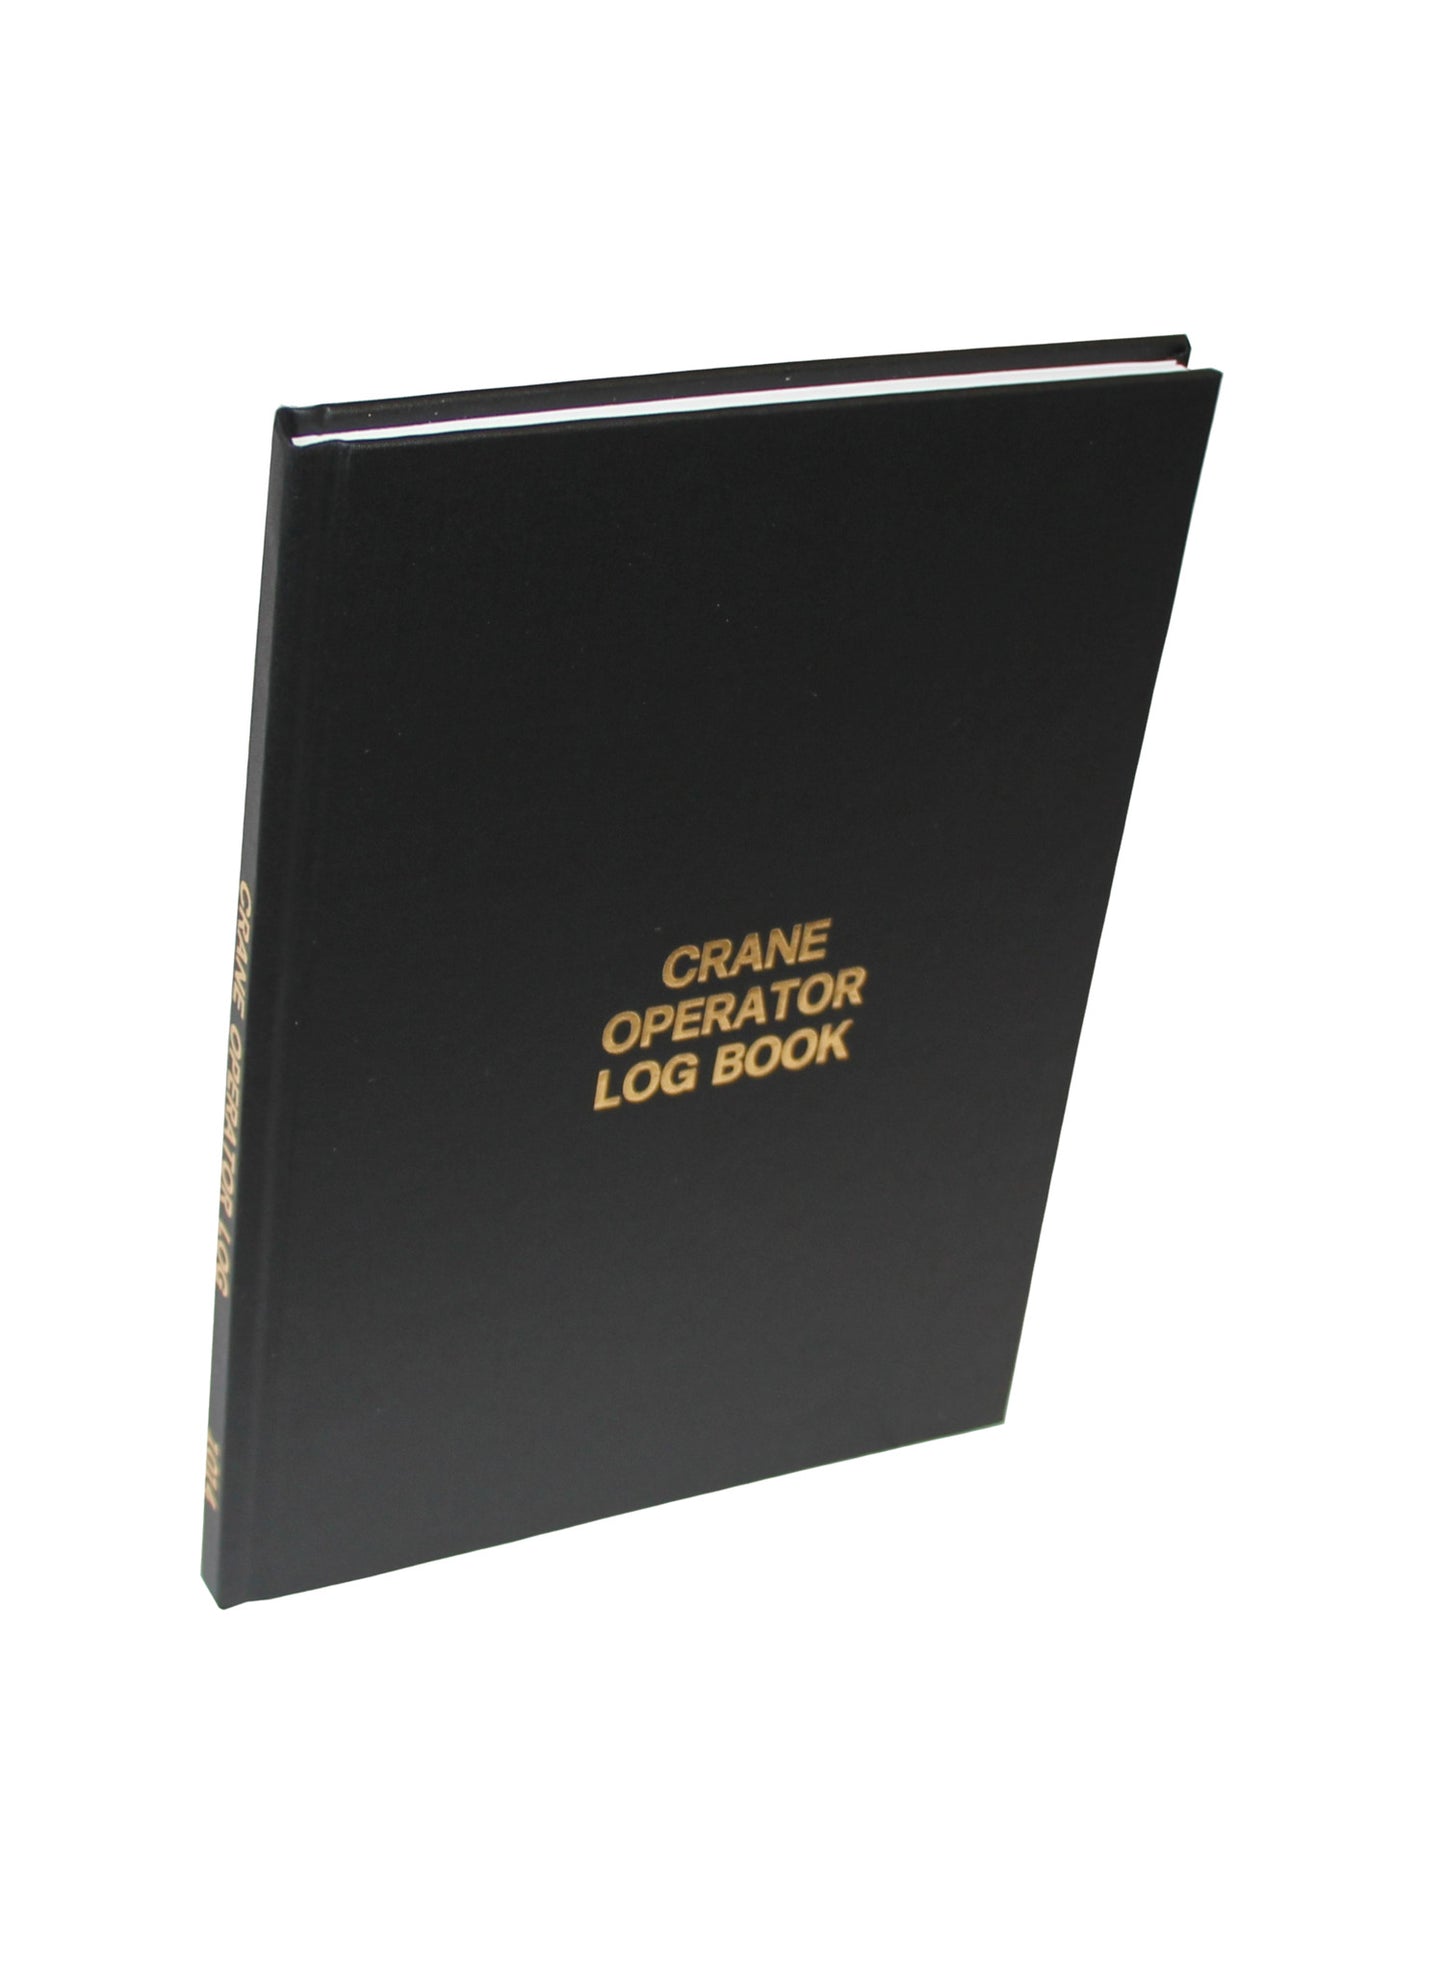 Crane Operator Log Book - Front